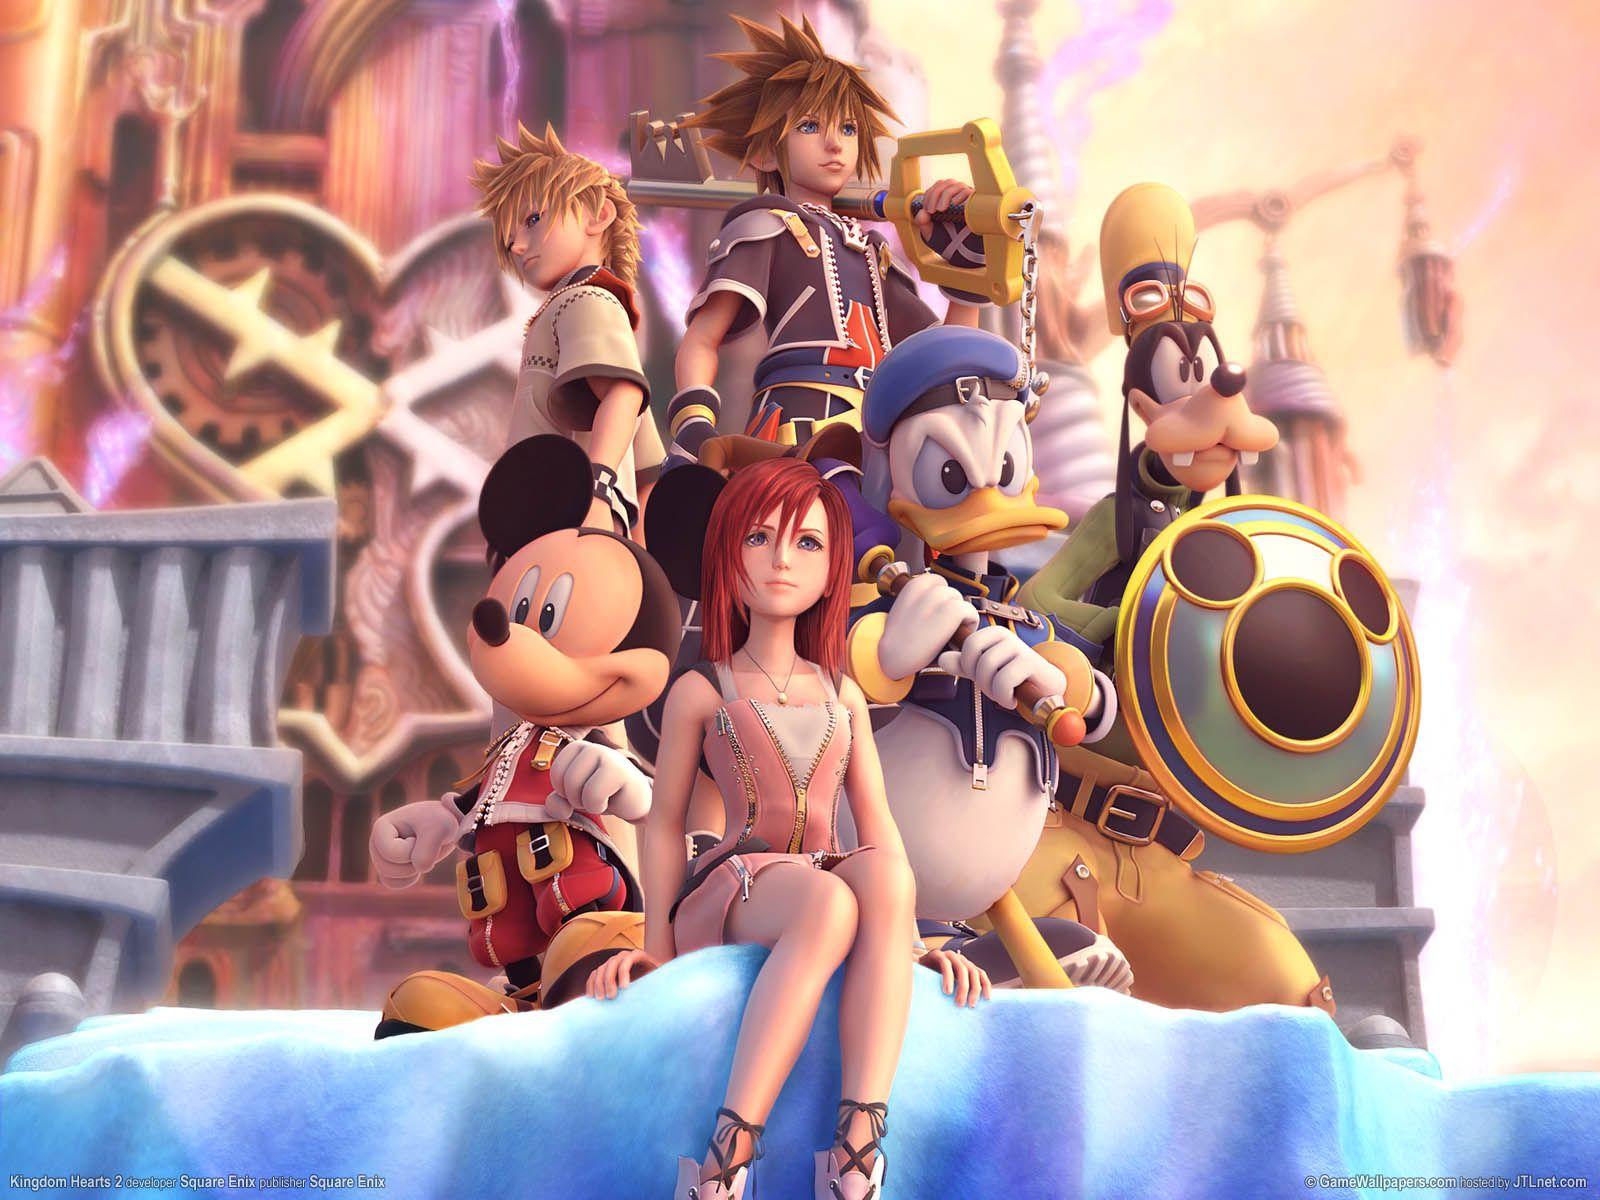 Kingdom Hearts, Wallpaper. Anime Image Board